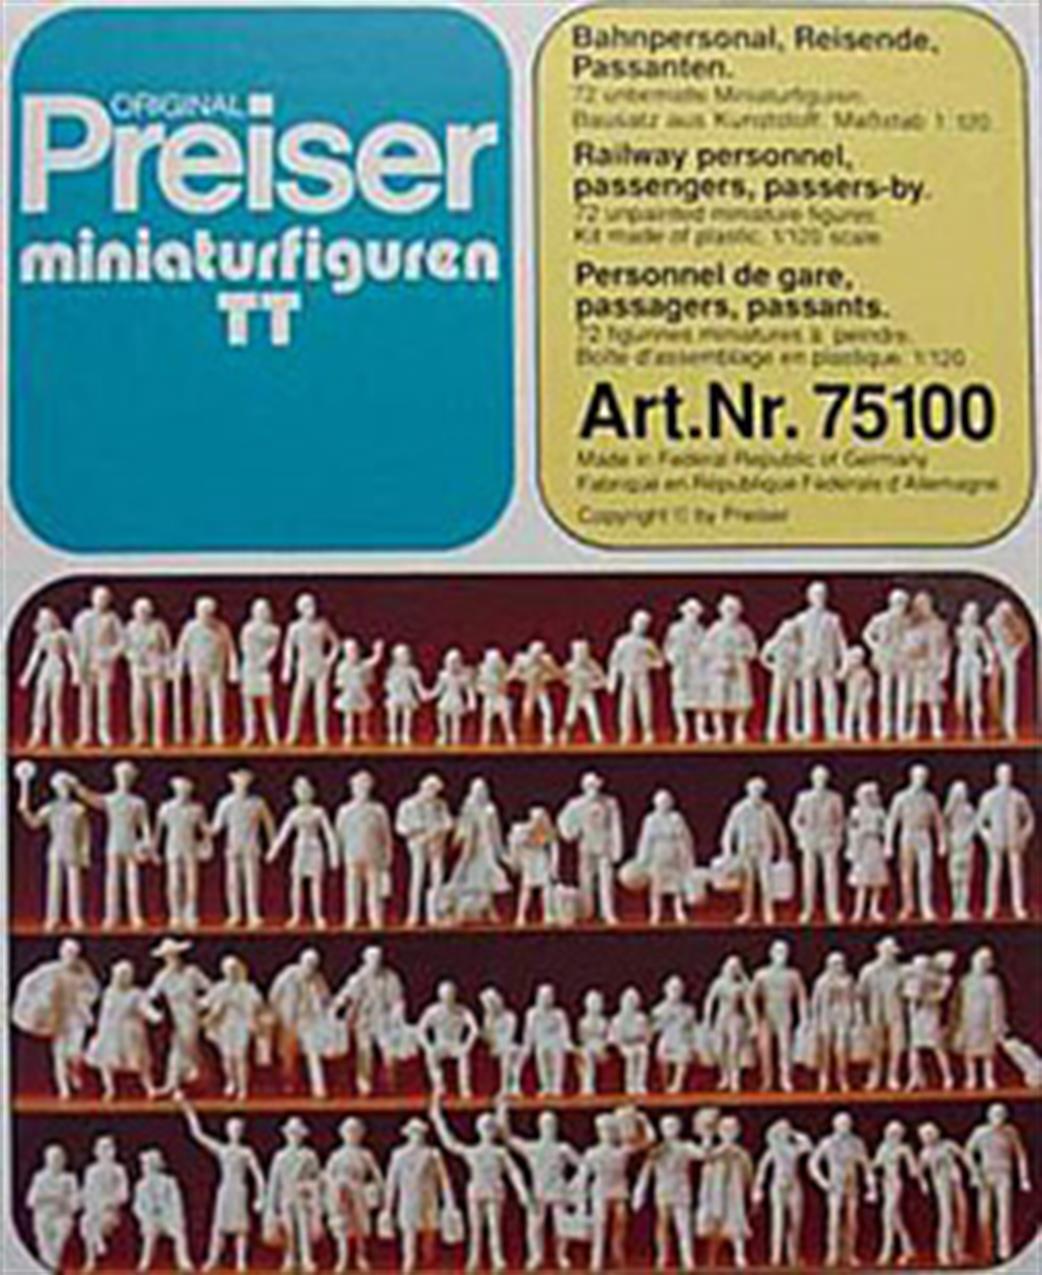 Preiser TT 75100 Railway Personnel, Passengers, Passers by